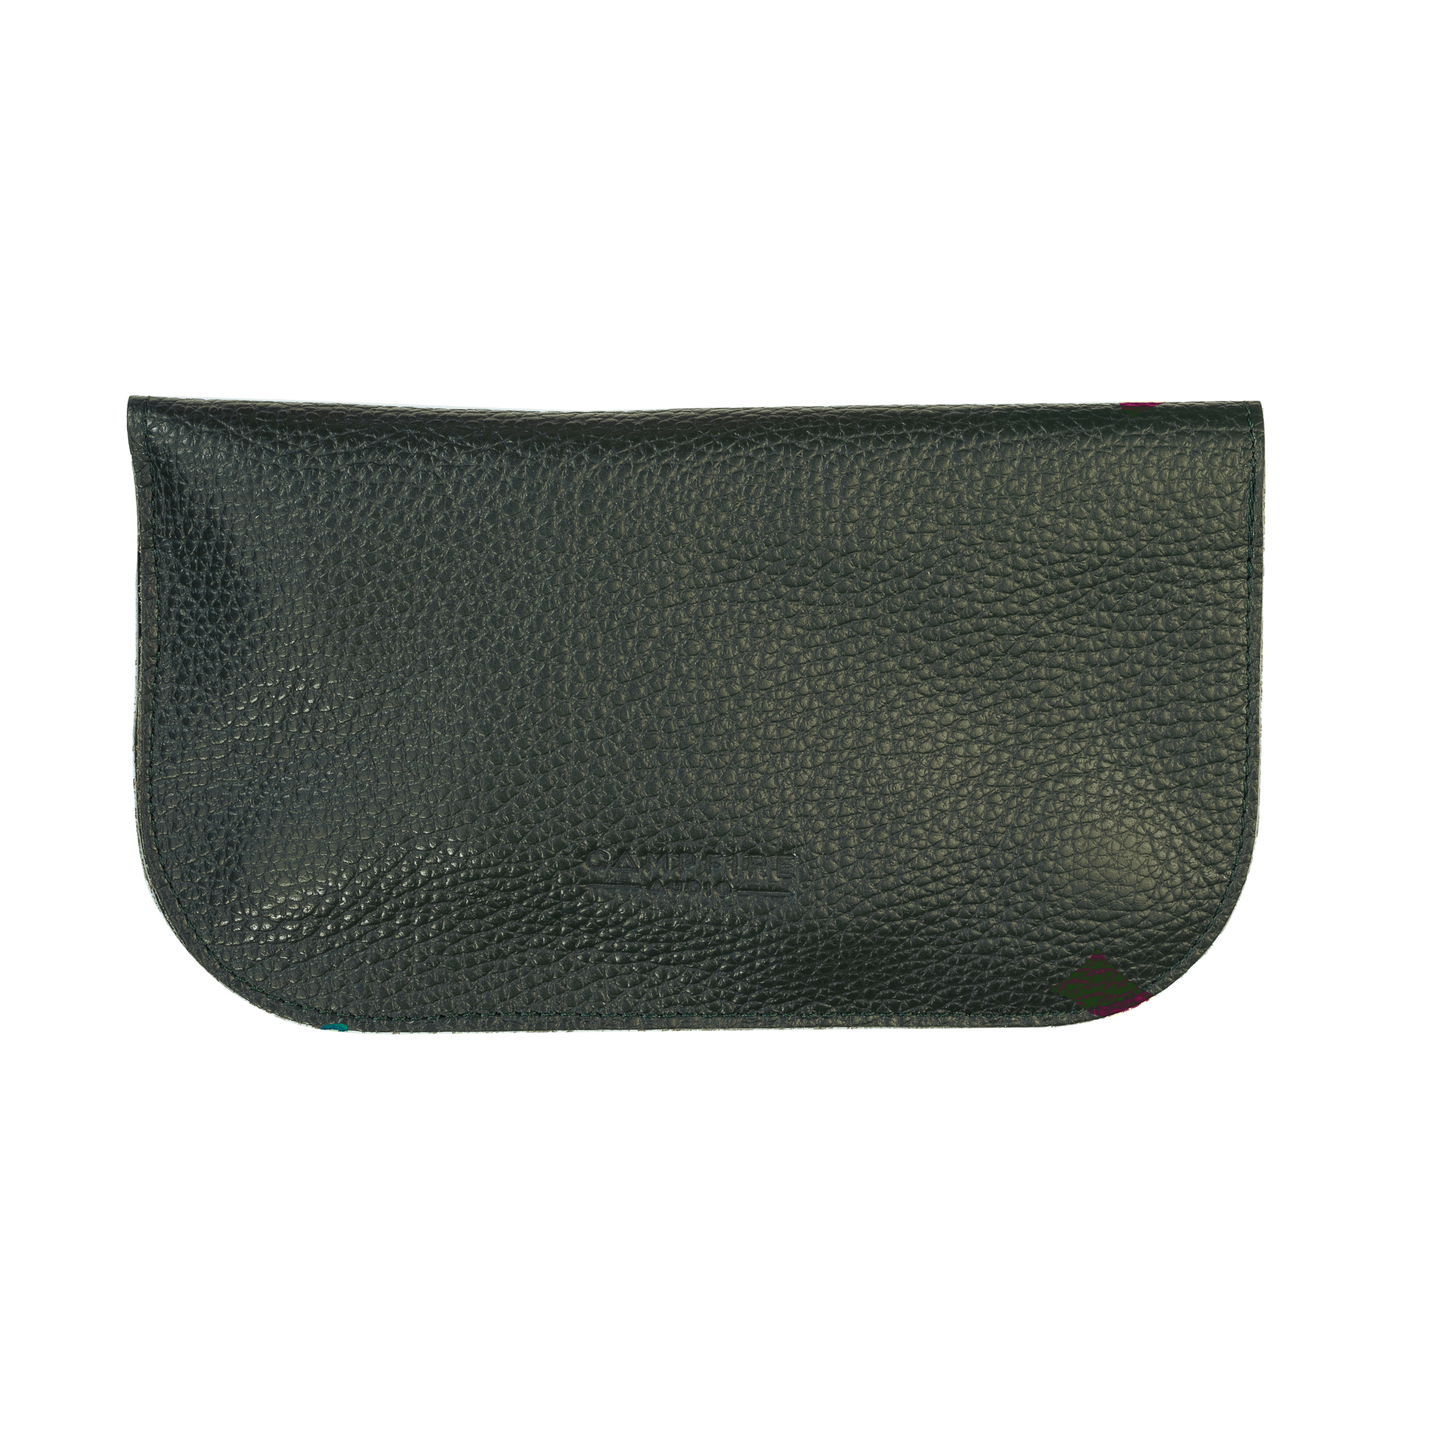 Dimensional Folding - Leather IEM Wallet